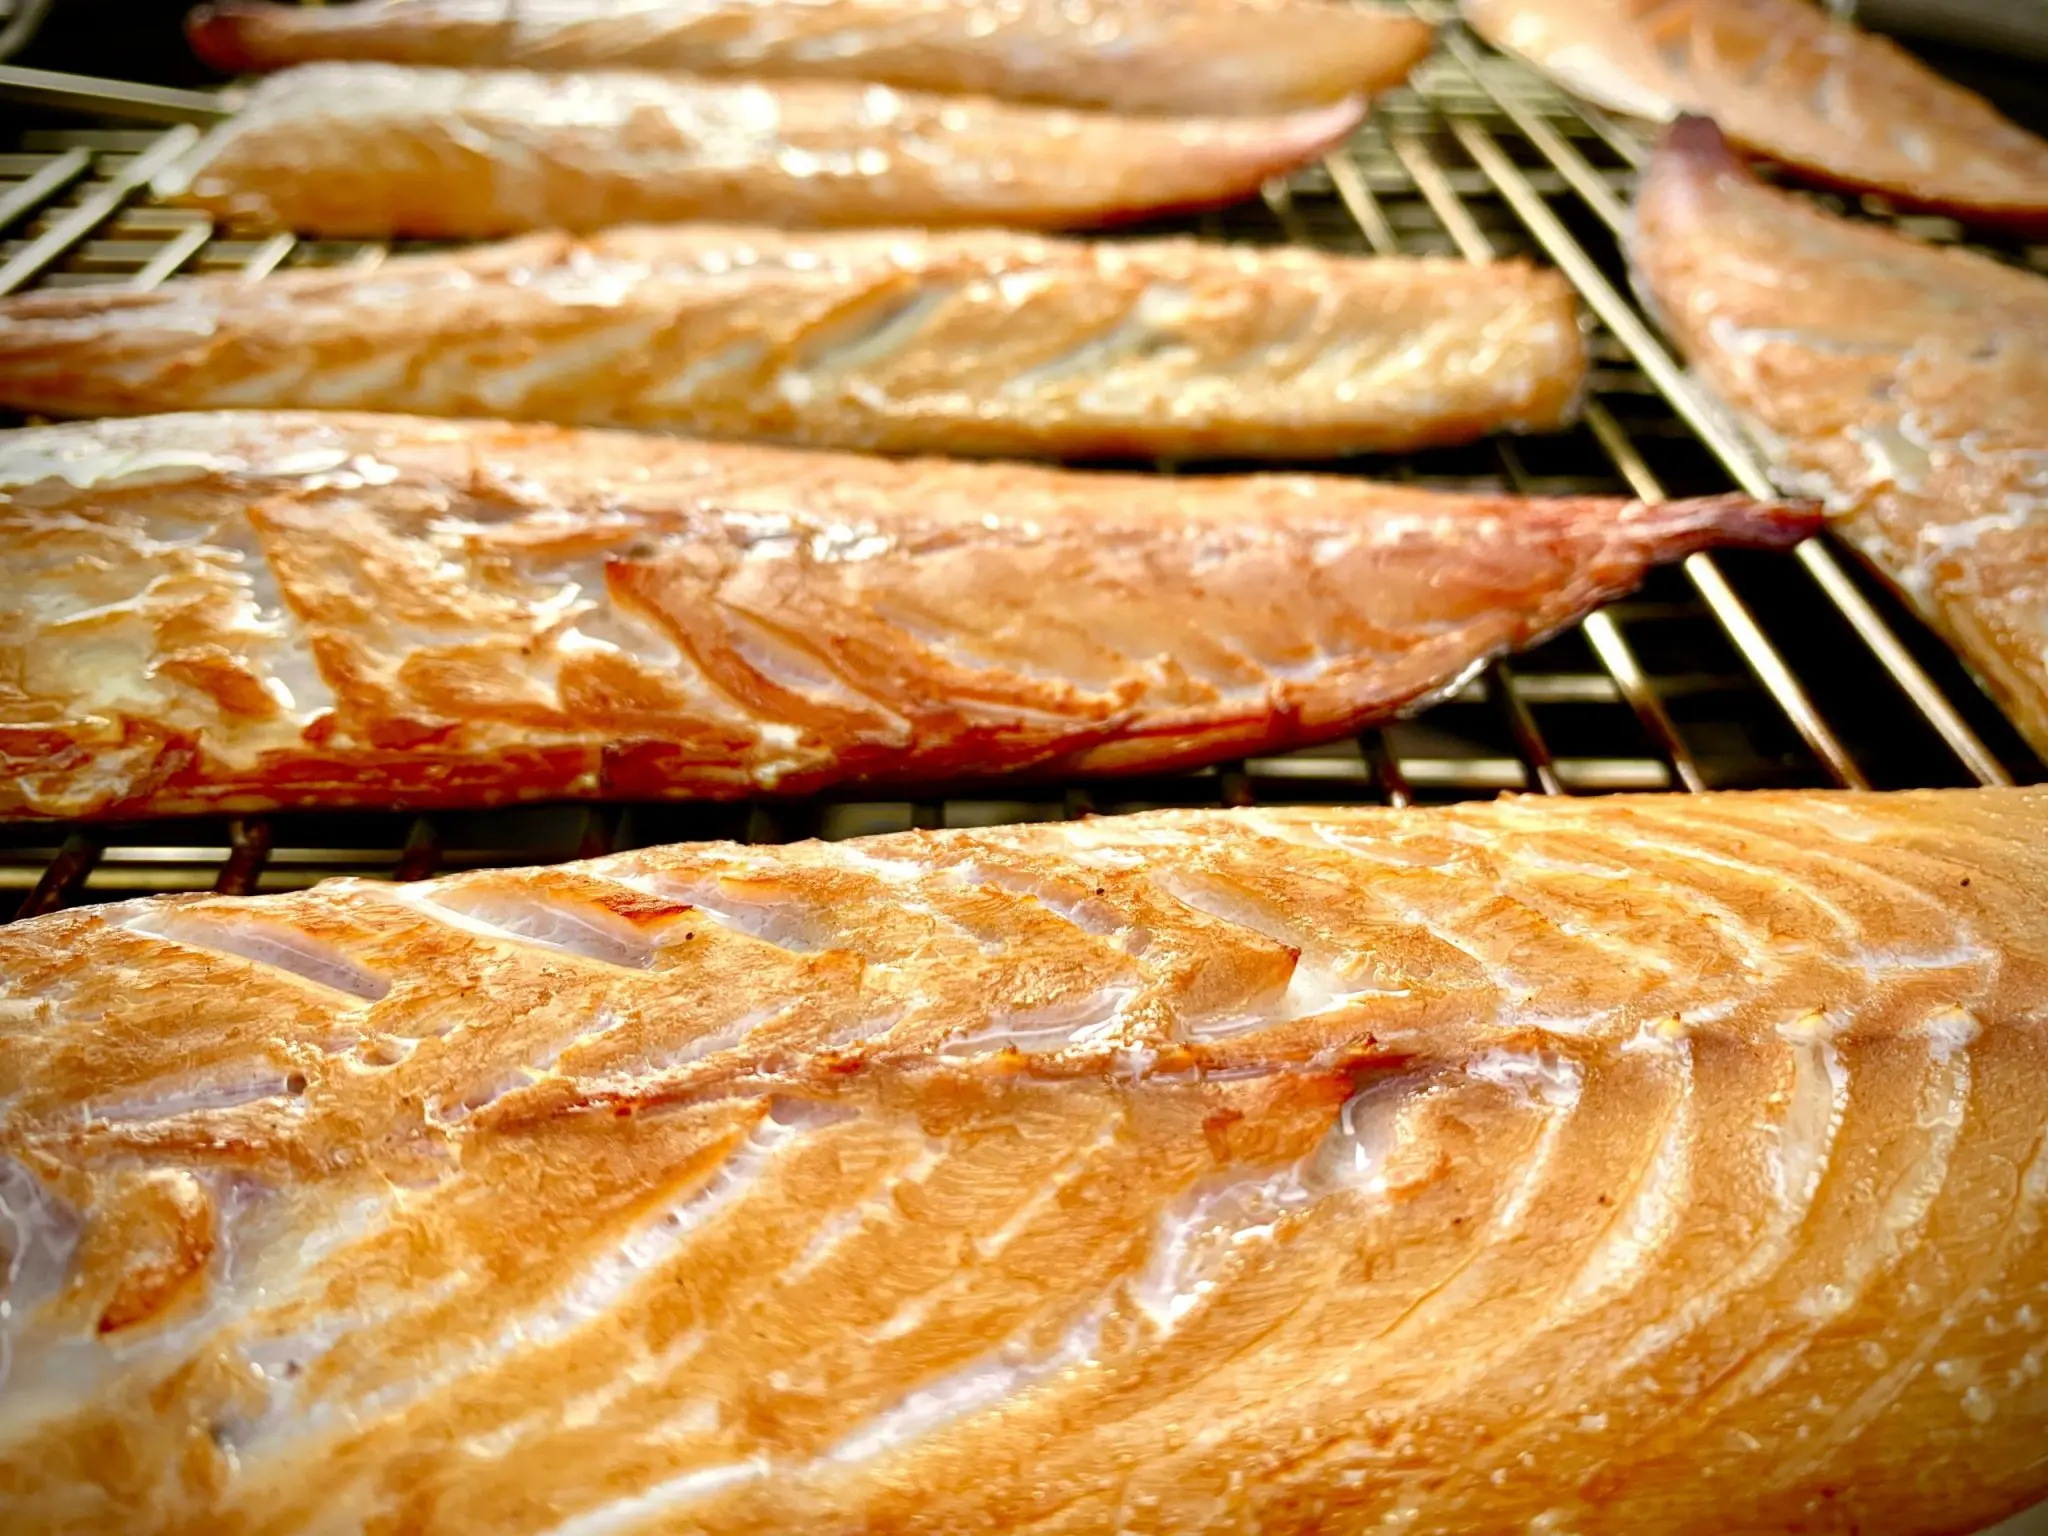 smoked mackerel brine - How do you brine mackerel before smoking